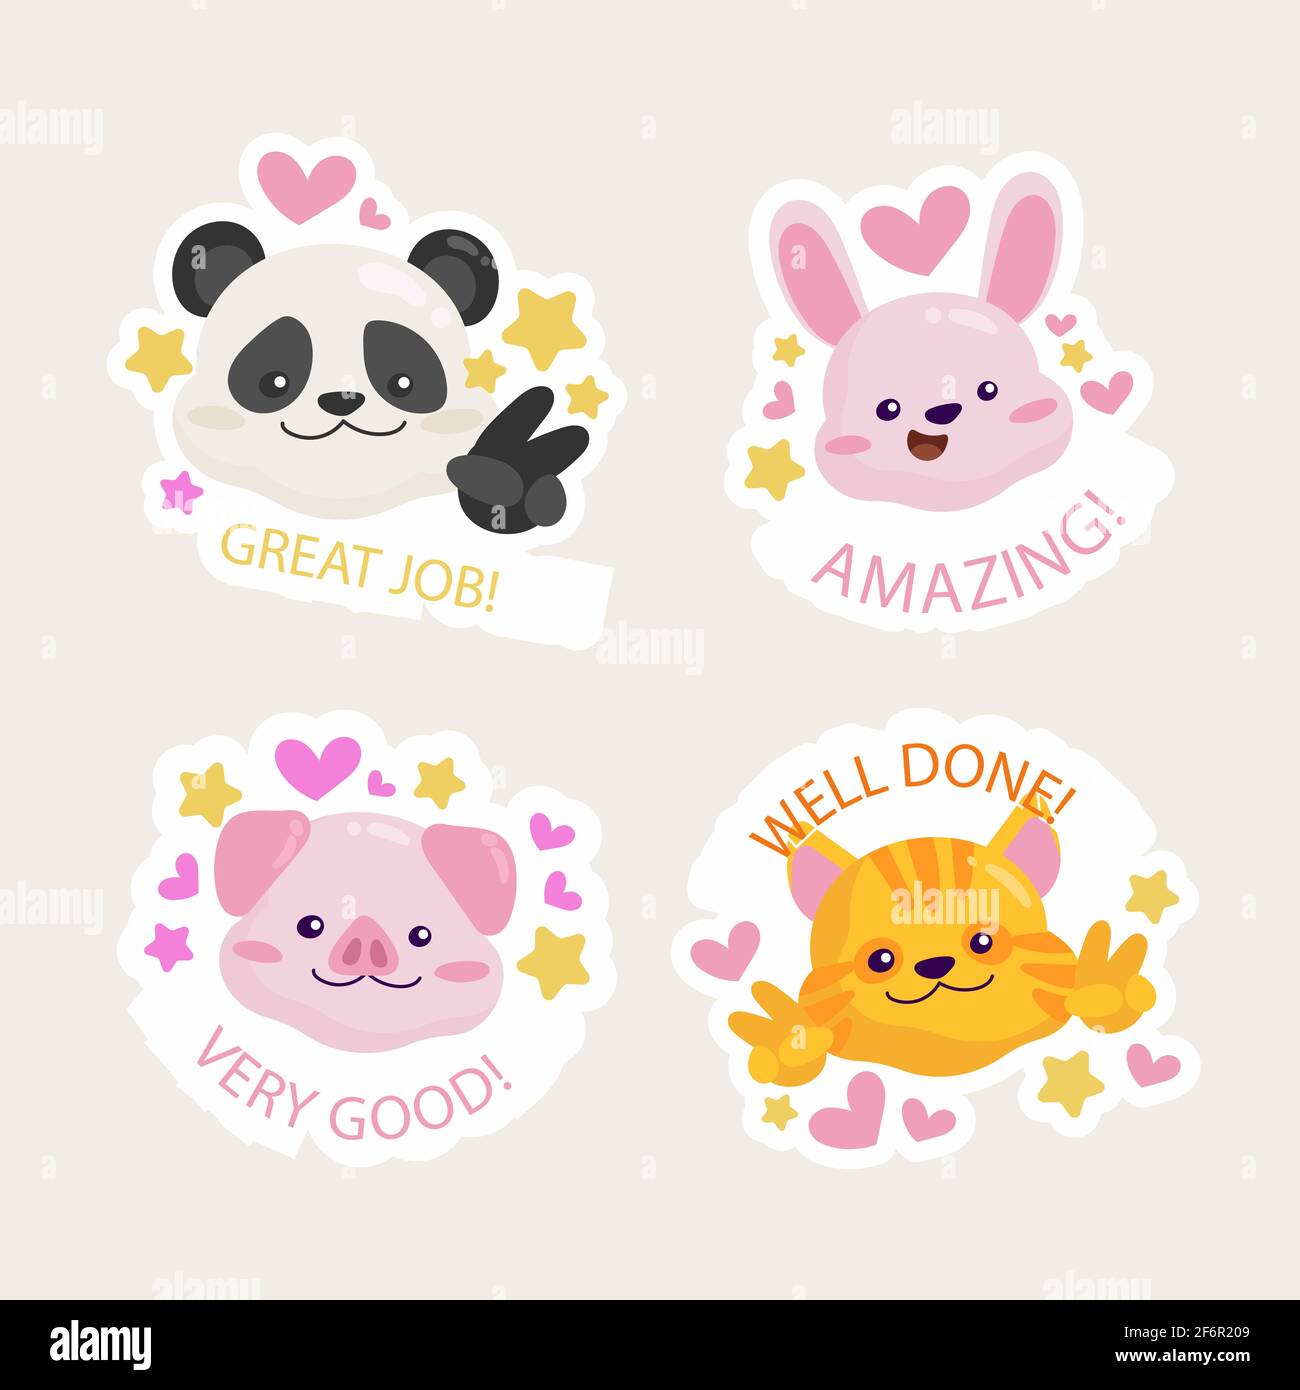 https://c8.alamy.com/comp/2F6R209/set-of-good-job-and-great-job-stickers-vector-illustration-2F6R209.jpg